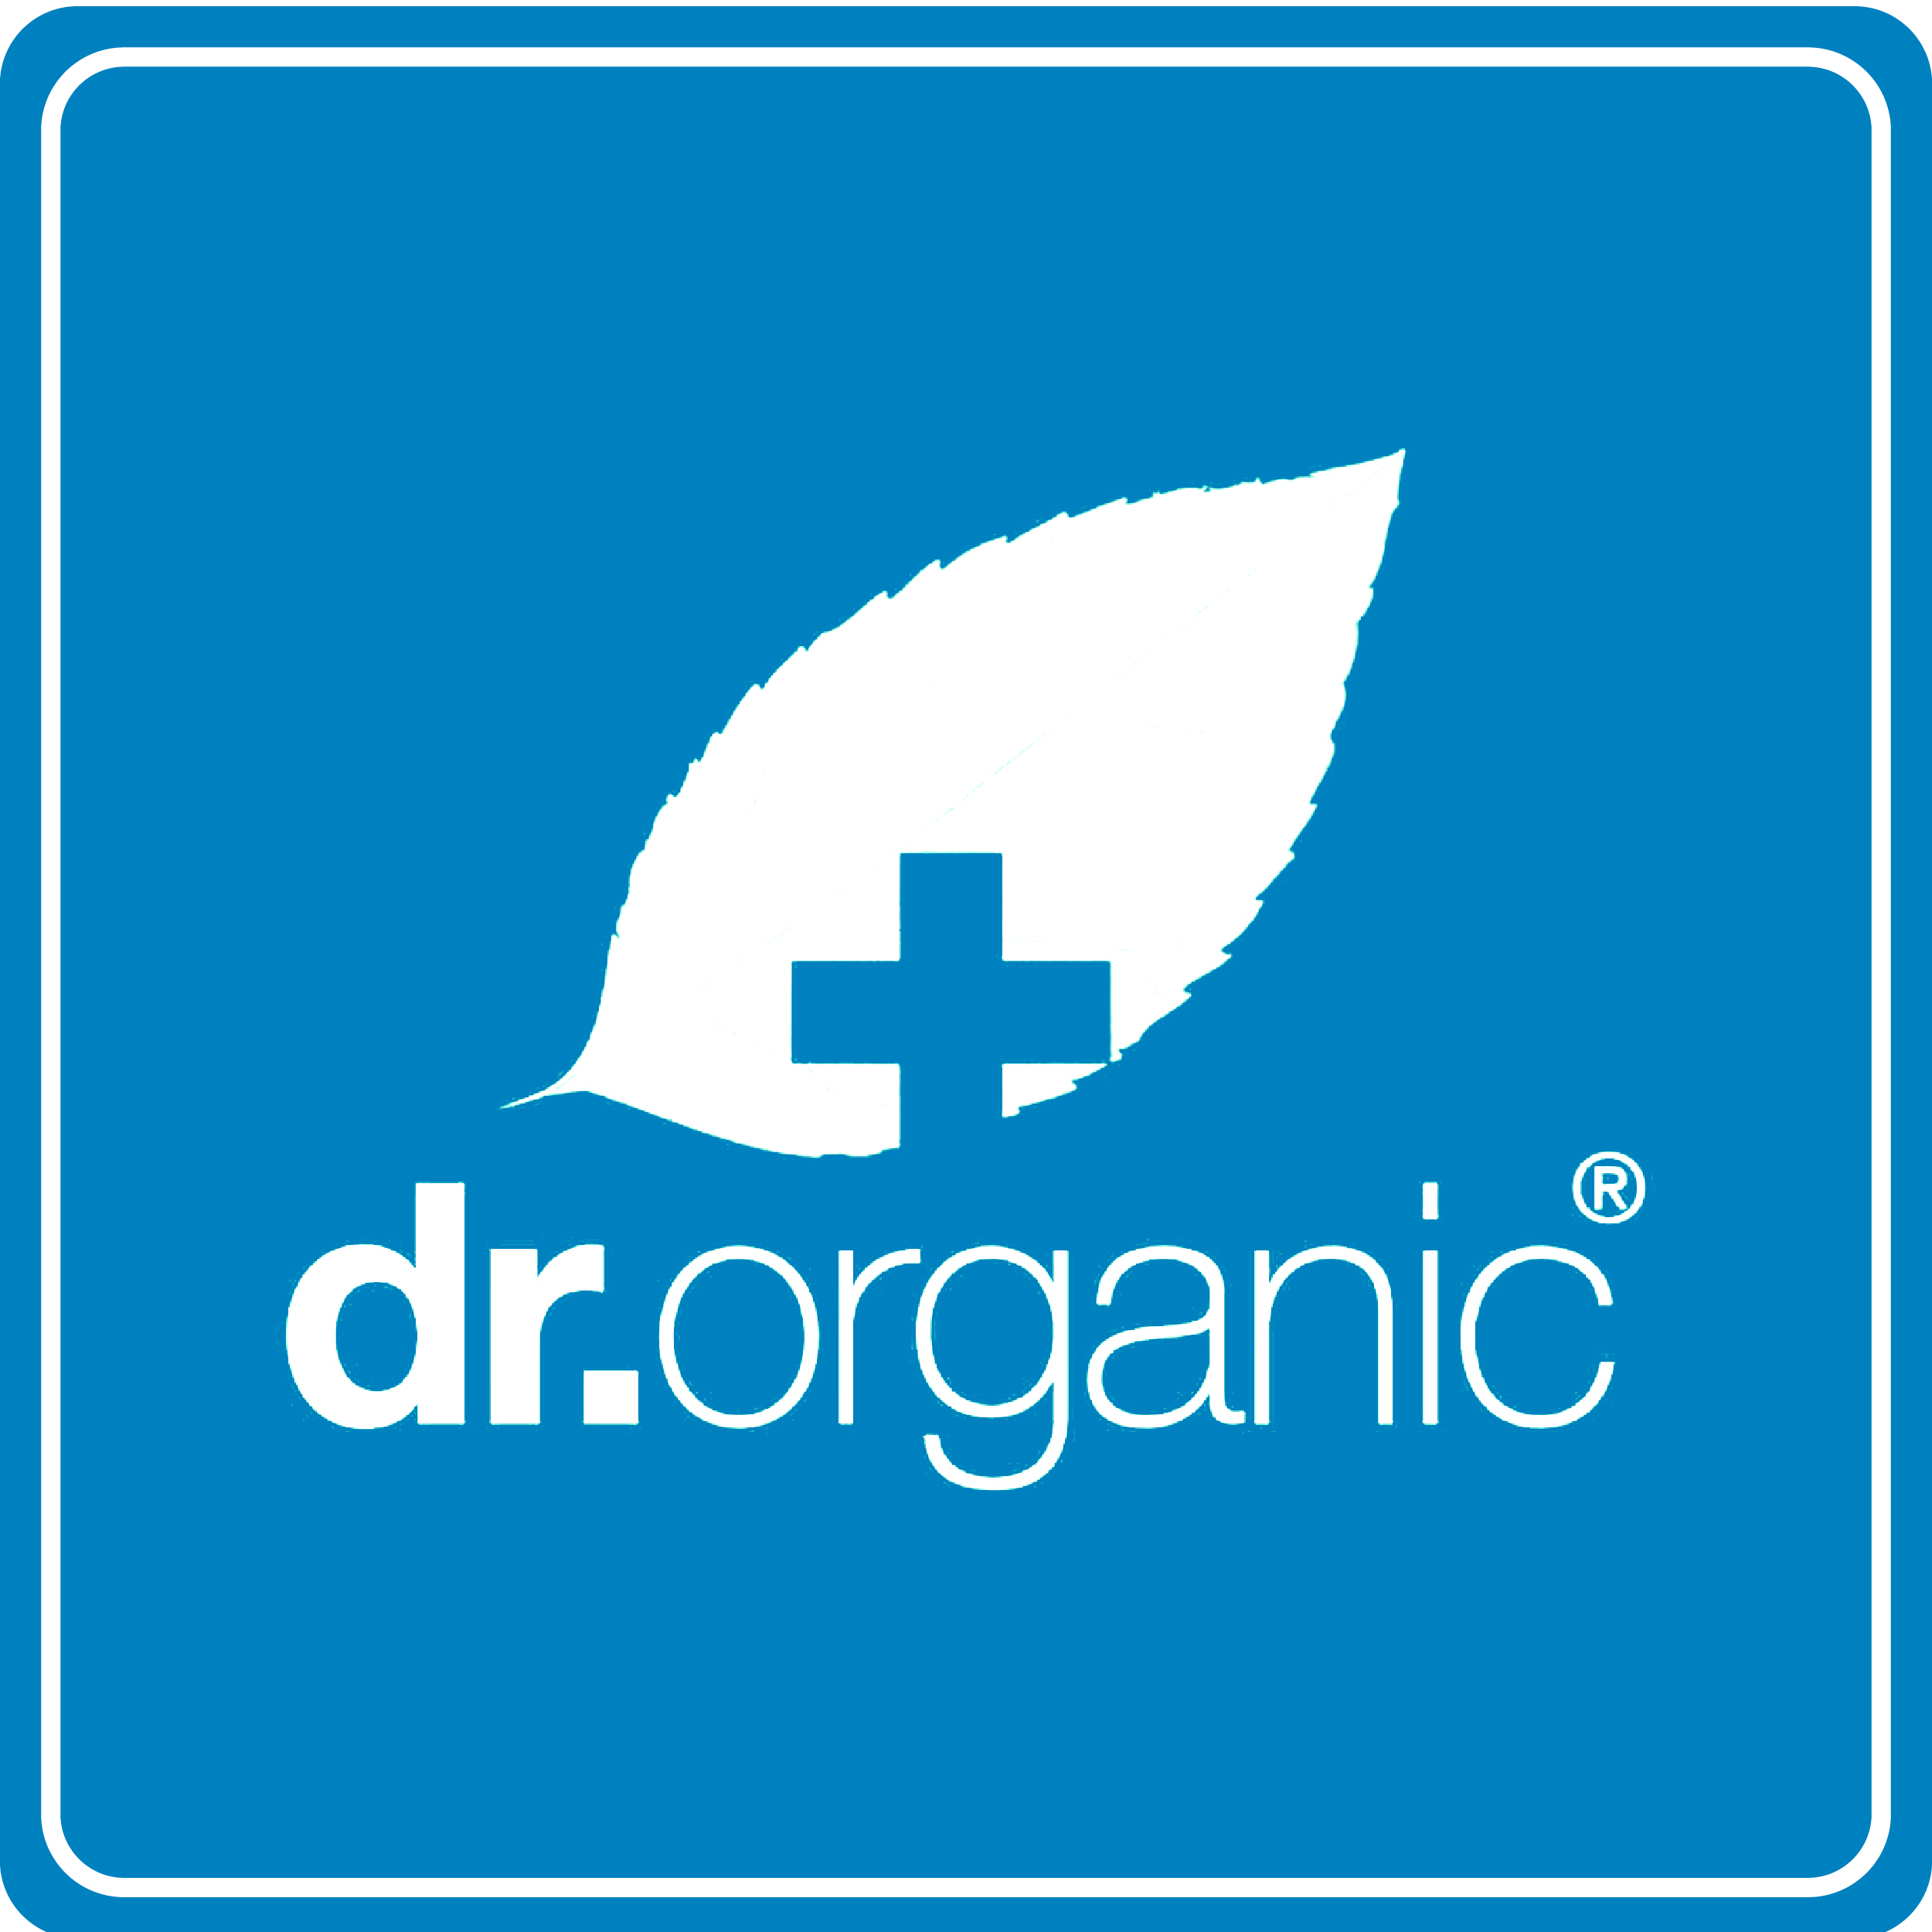 DR ORGANIC